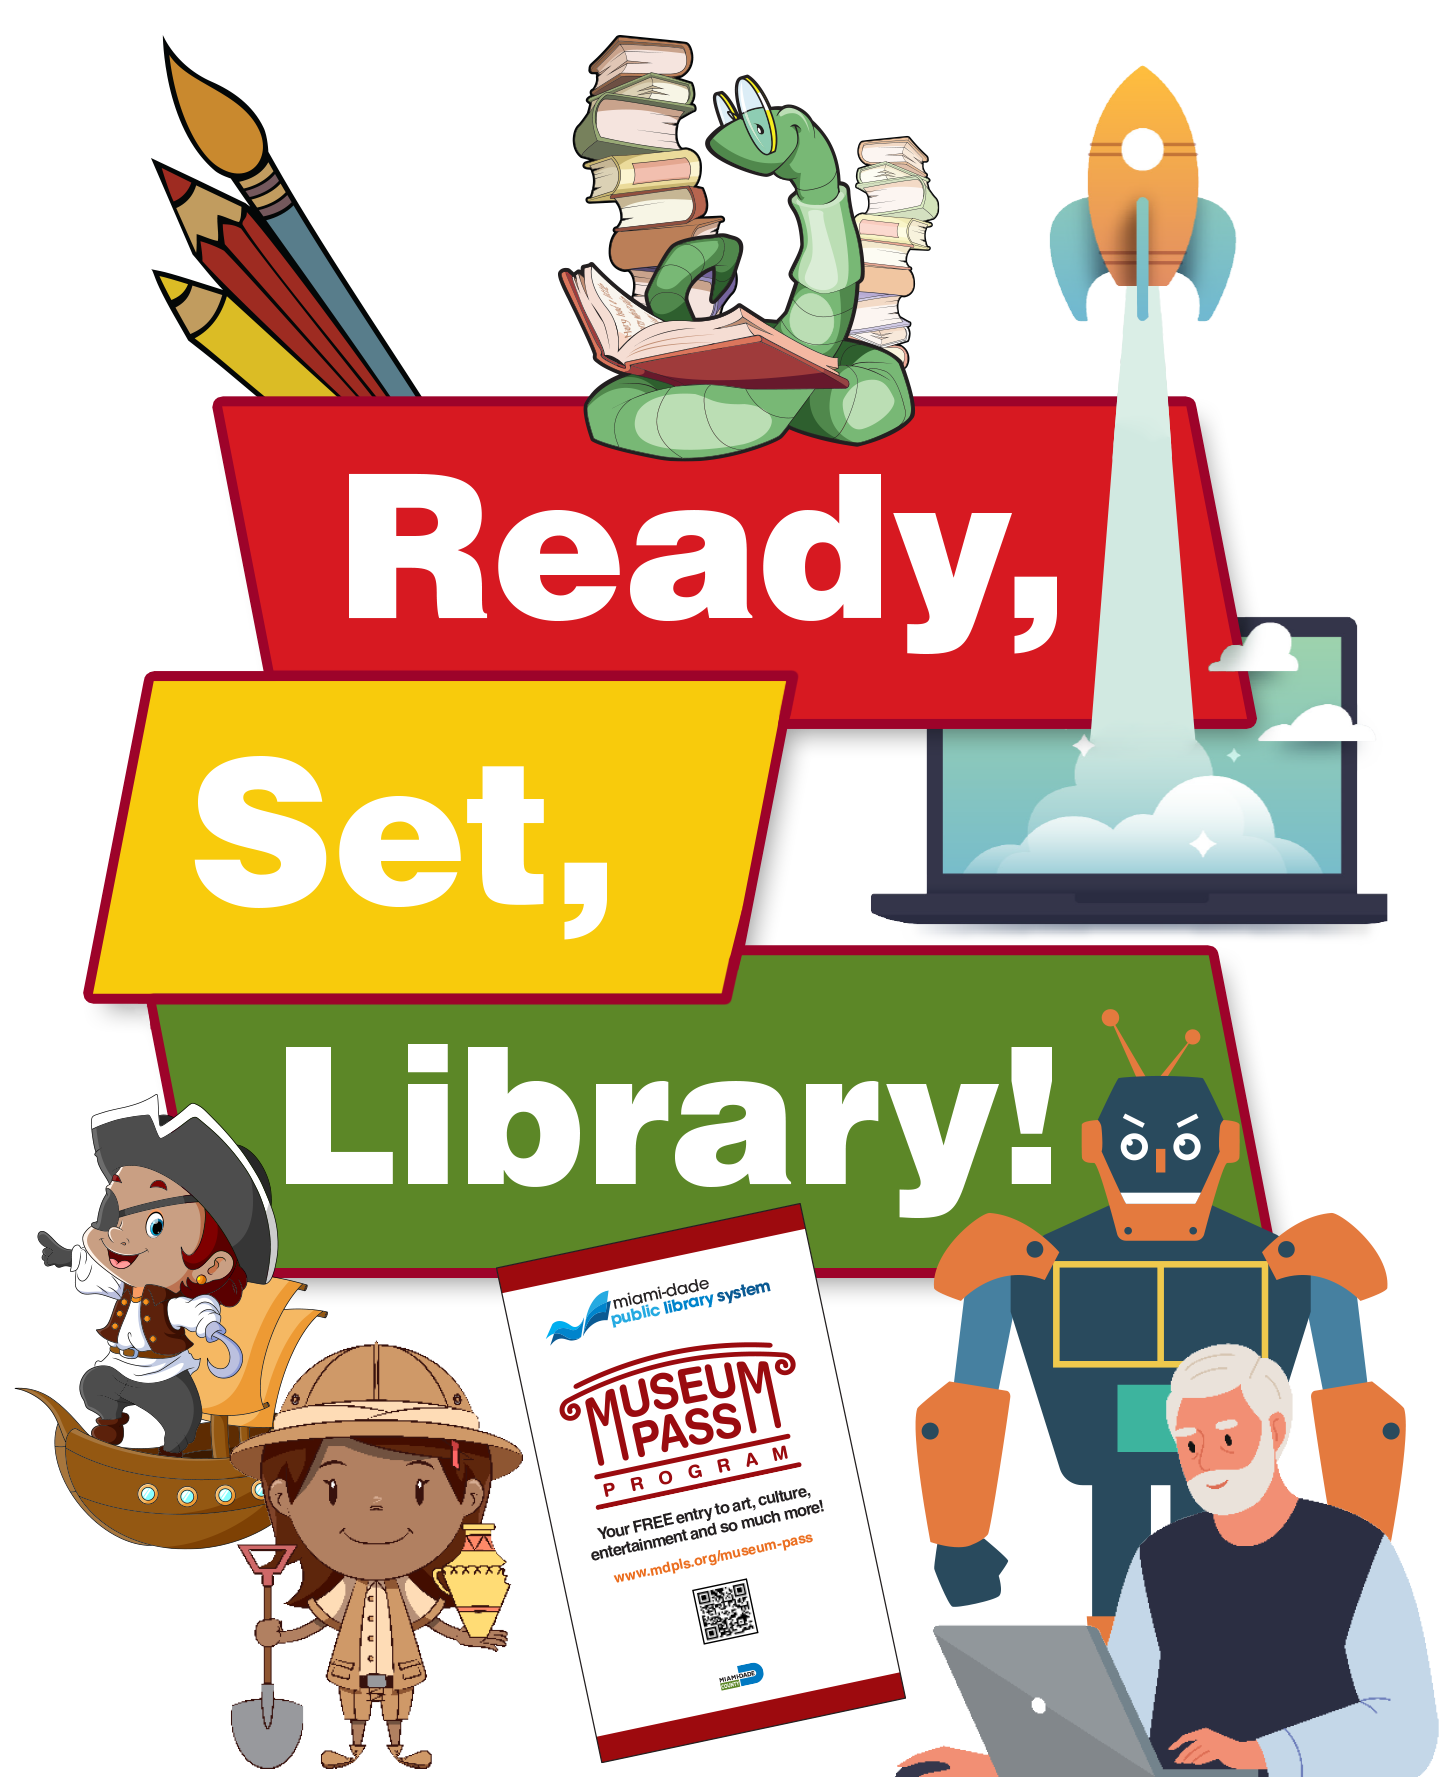 Ready, Set, Library!